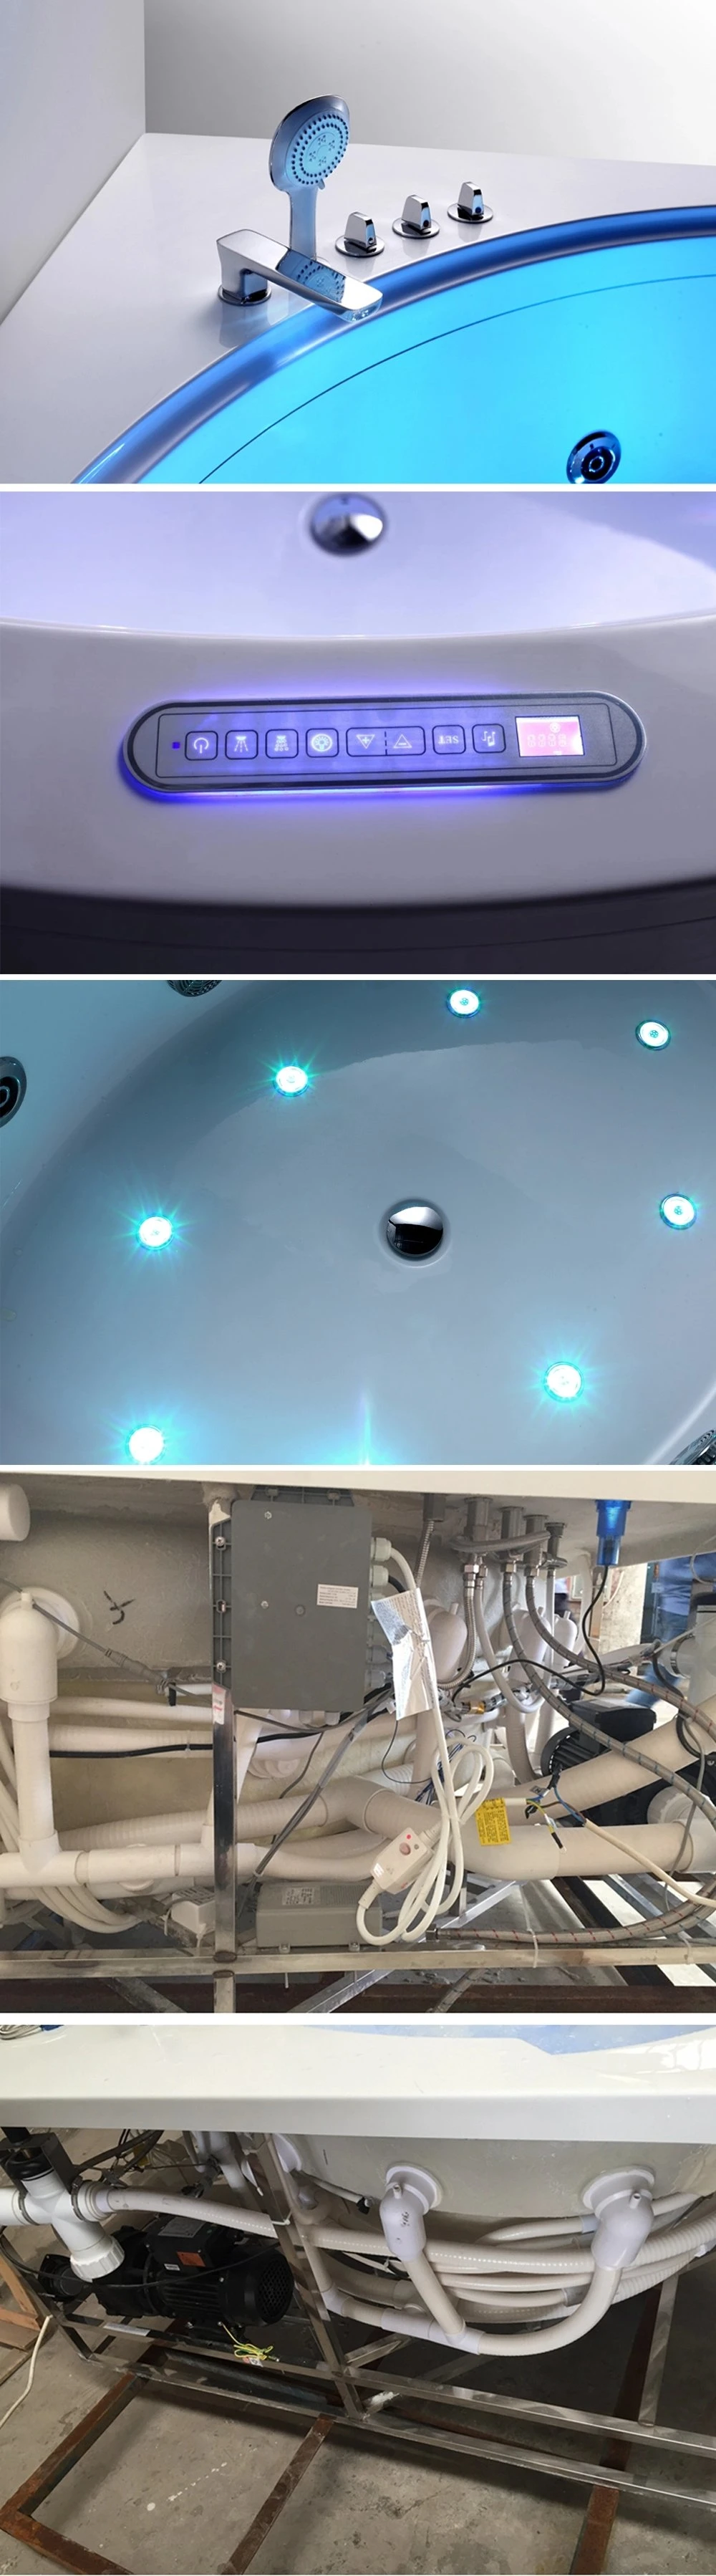 Australi Fiber Clear Glass Acrylic Cheap Corner Bath Tub